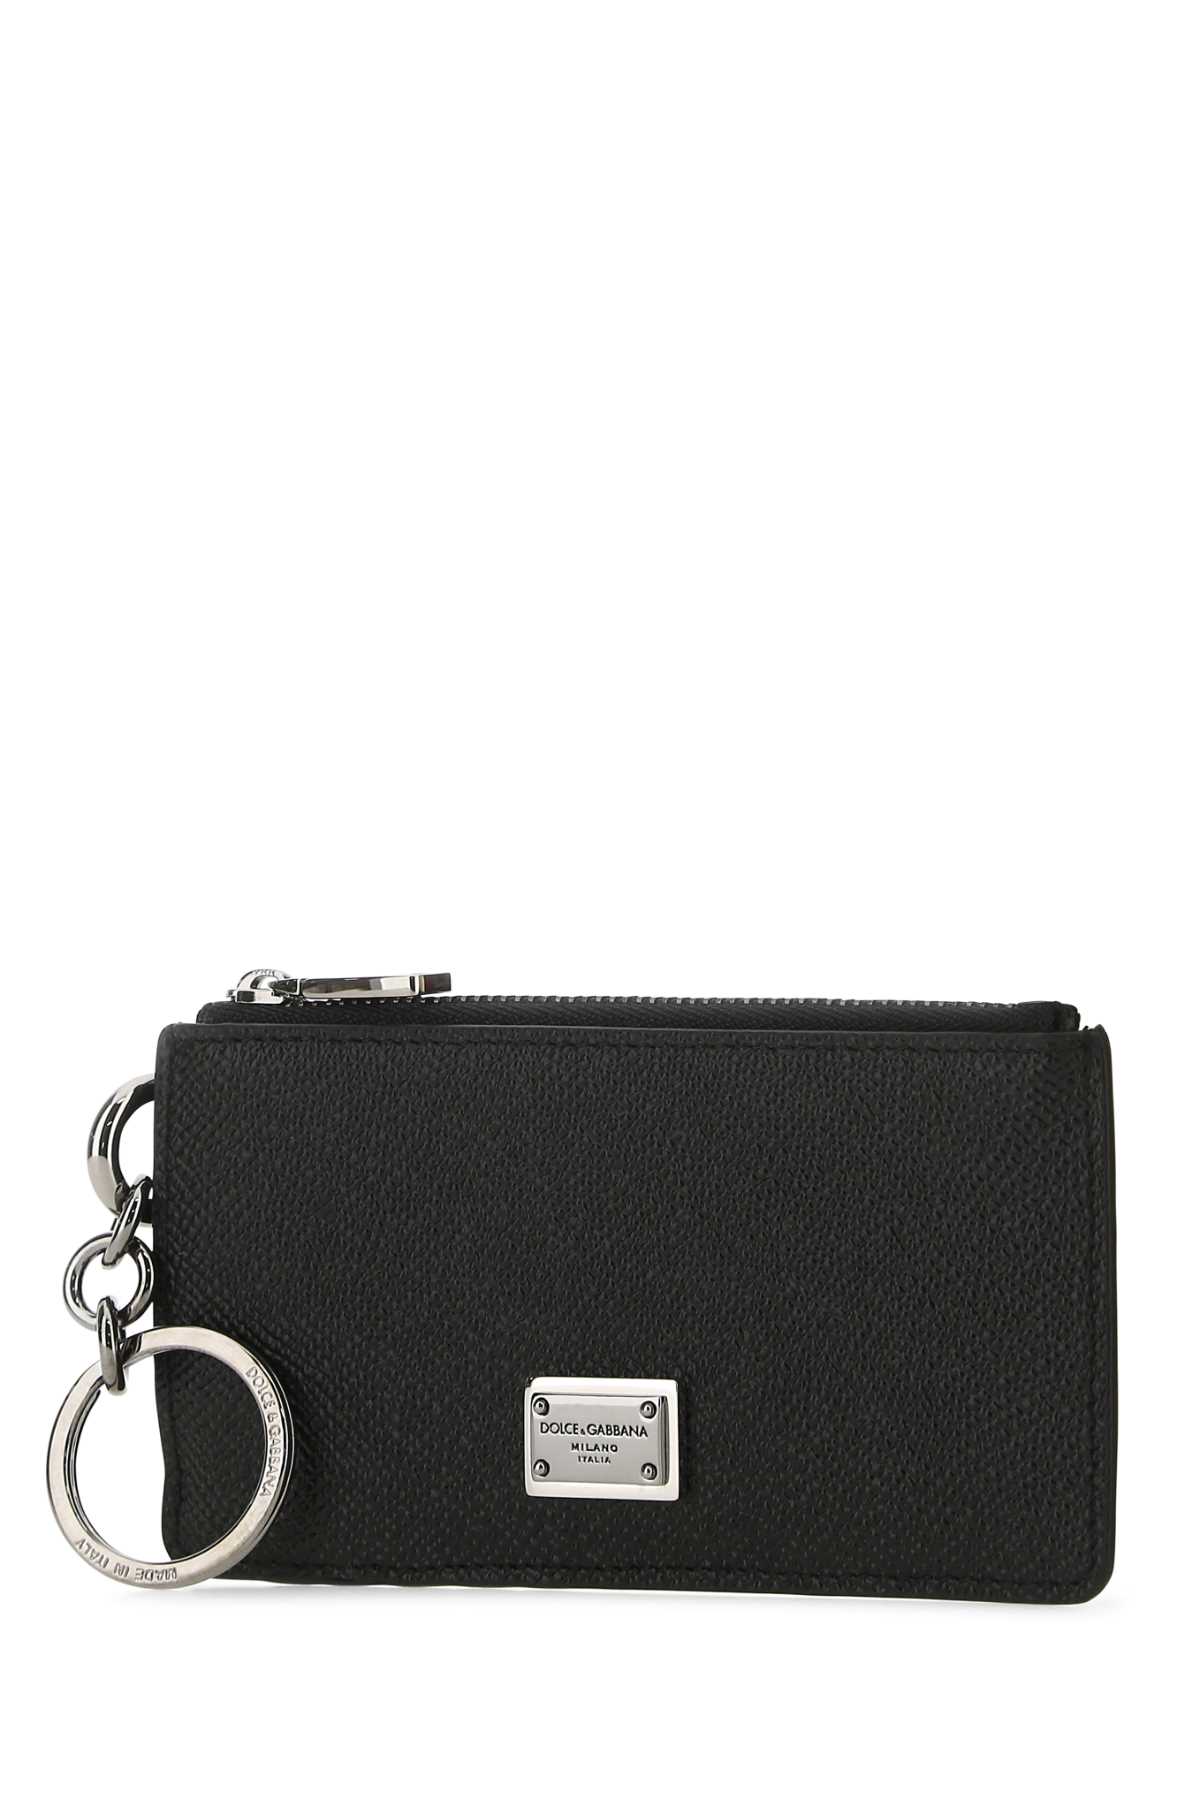 Dolce & Gabbana Black Leather Card Holder In Nero